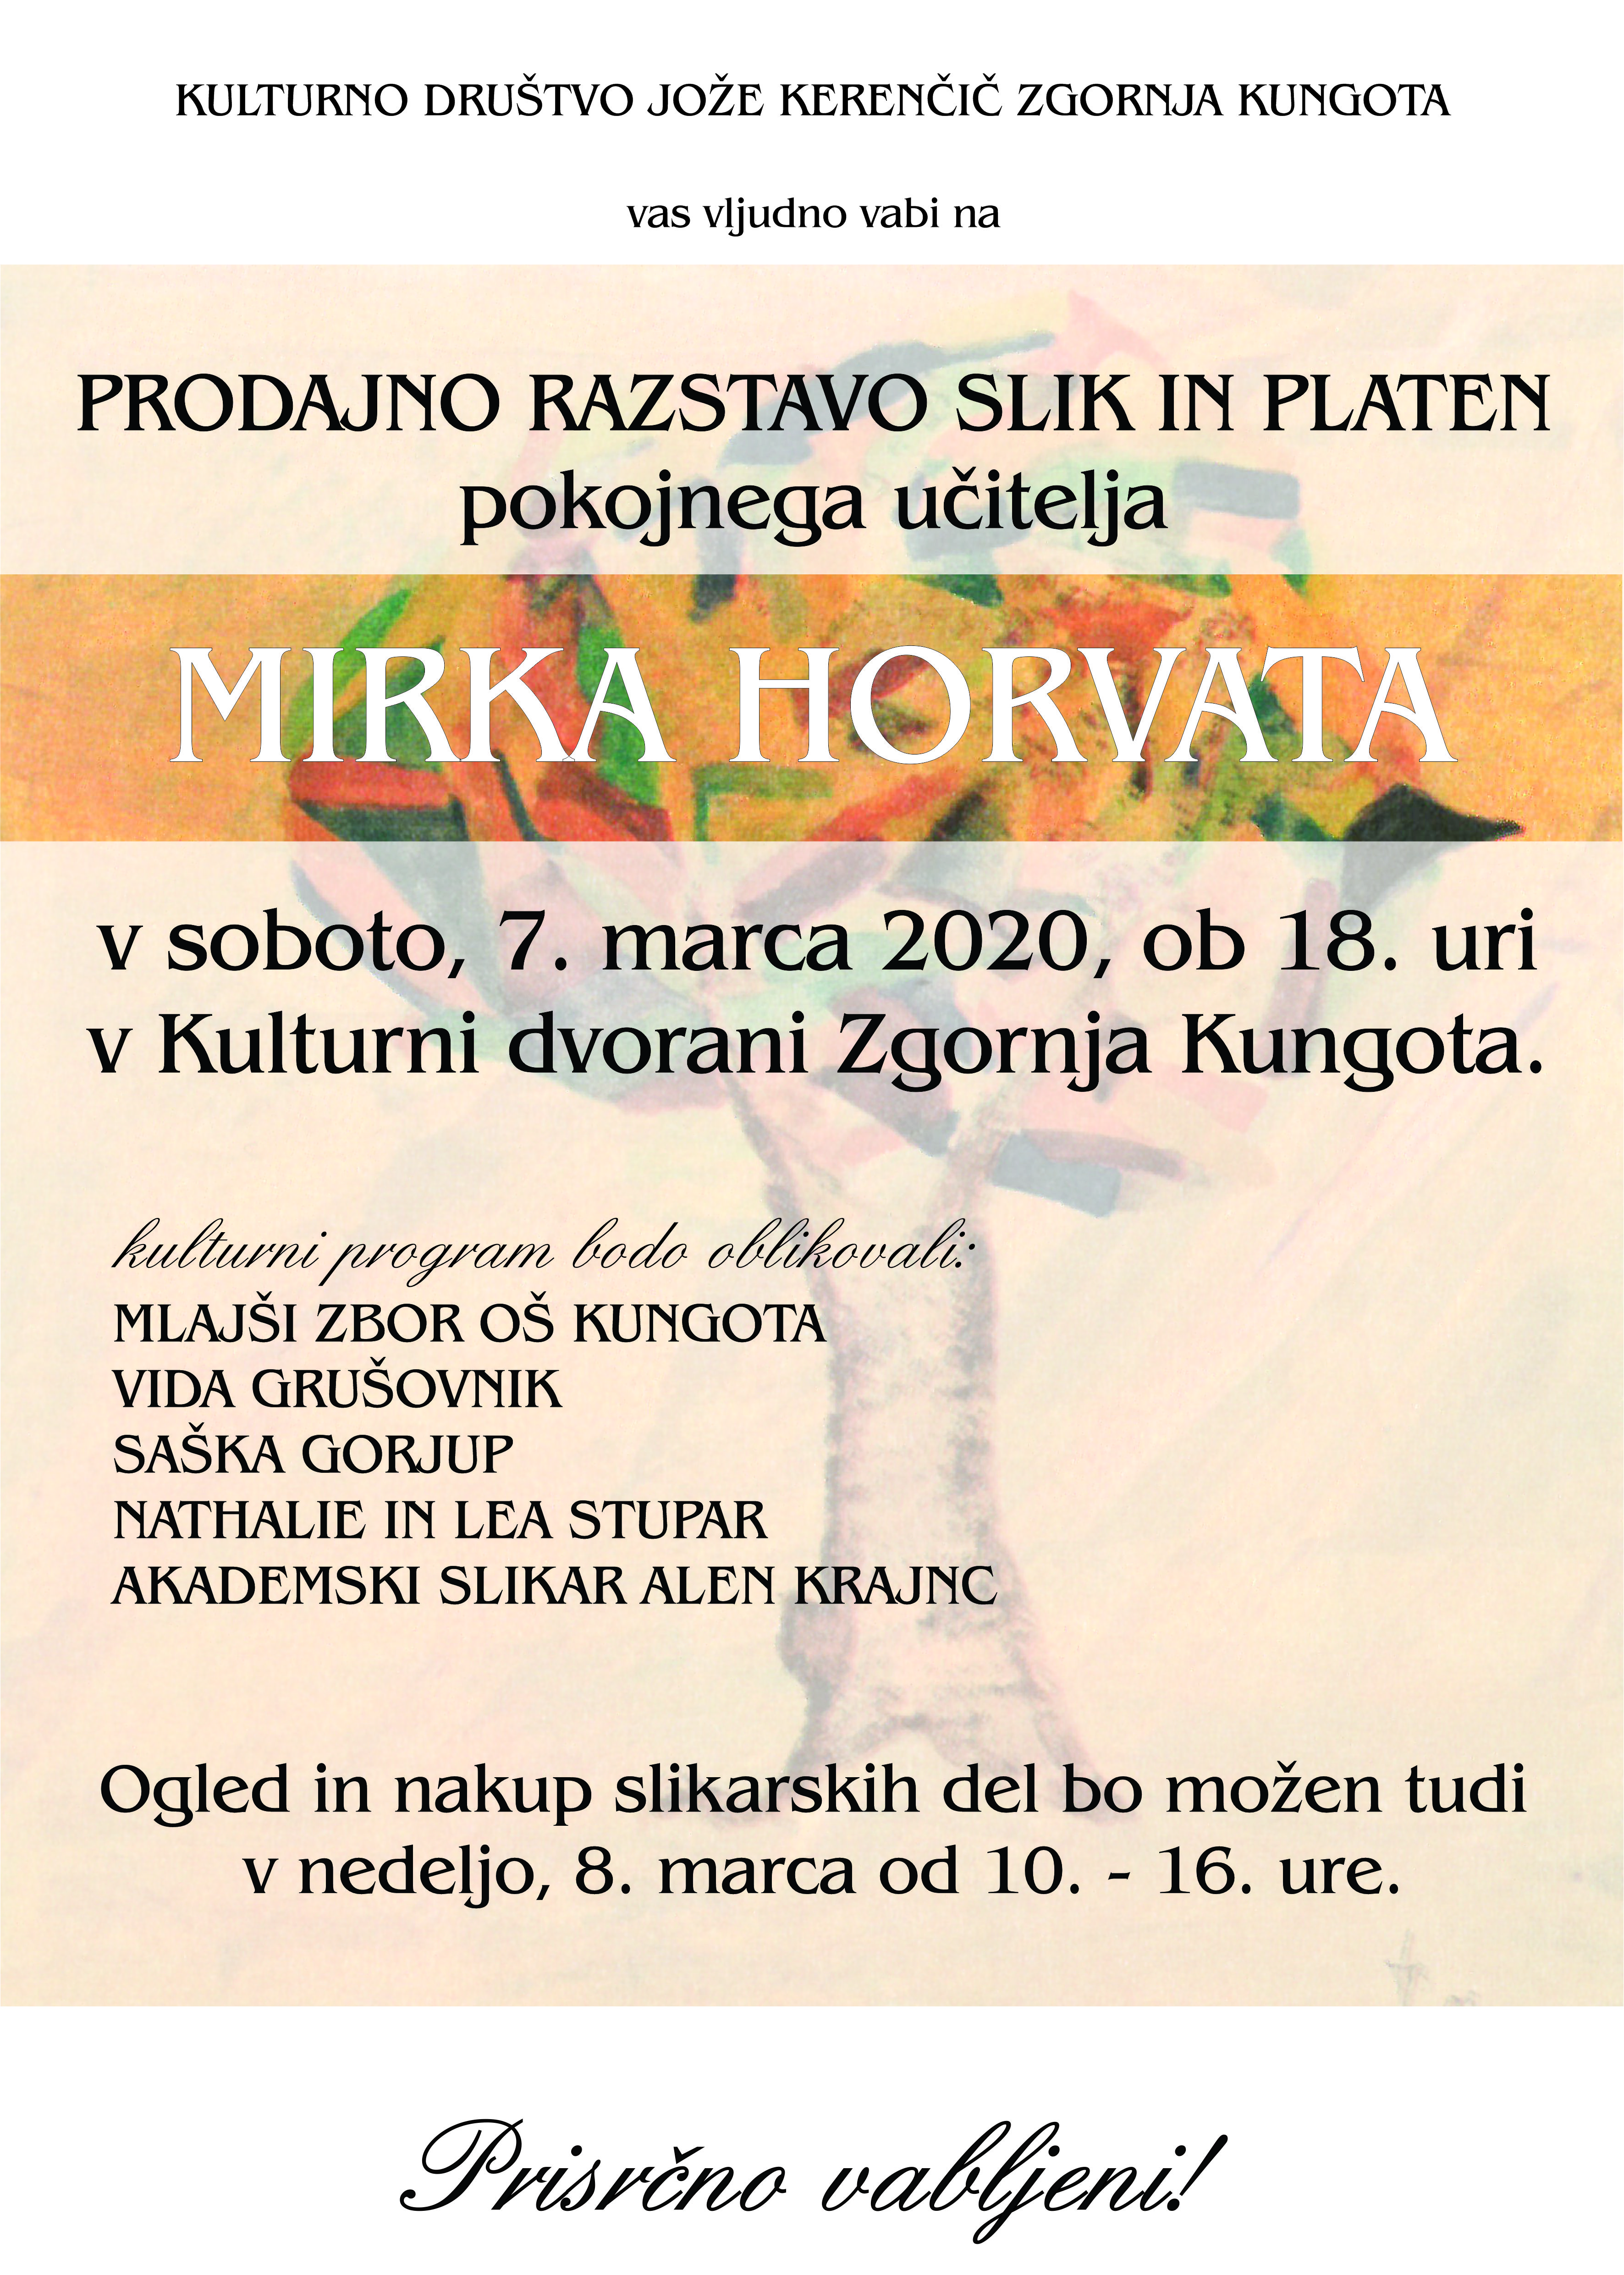 Prodajna razstava Mirka Horvata.jpg